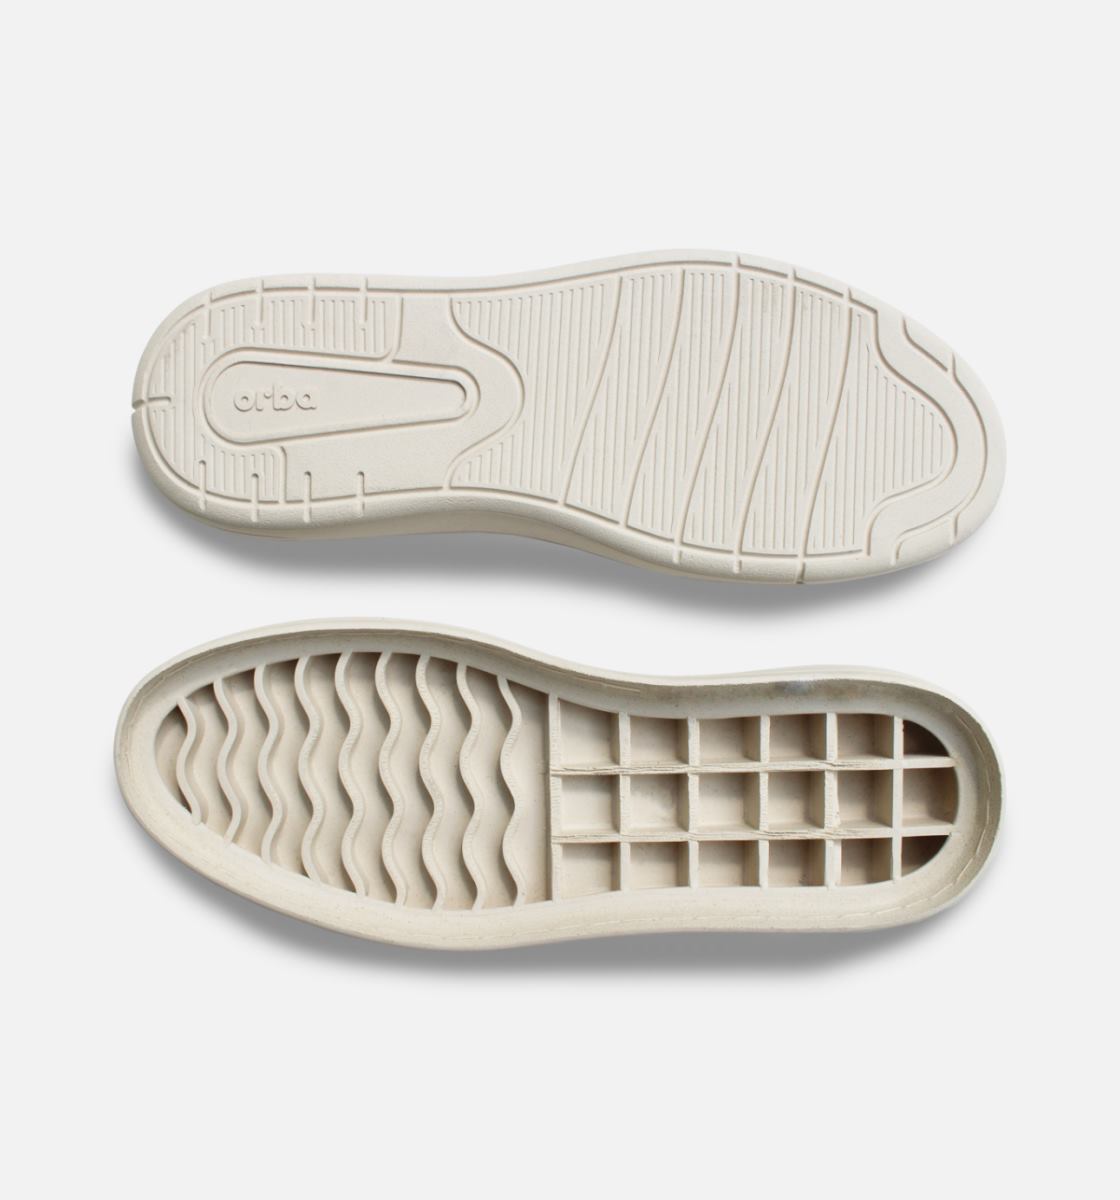 Orba Ghost Sneaker sole component flat lay